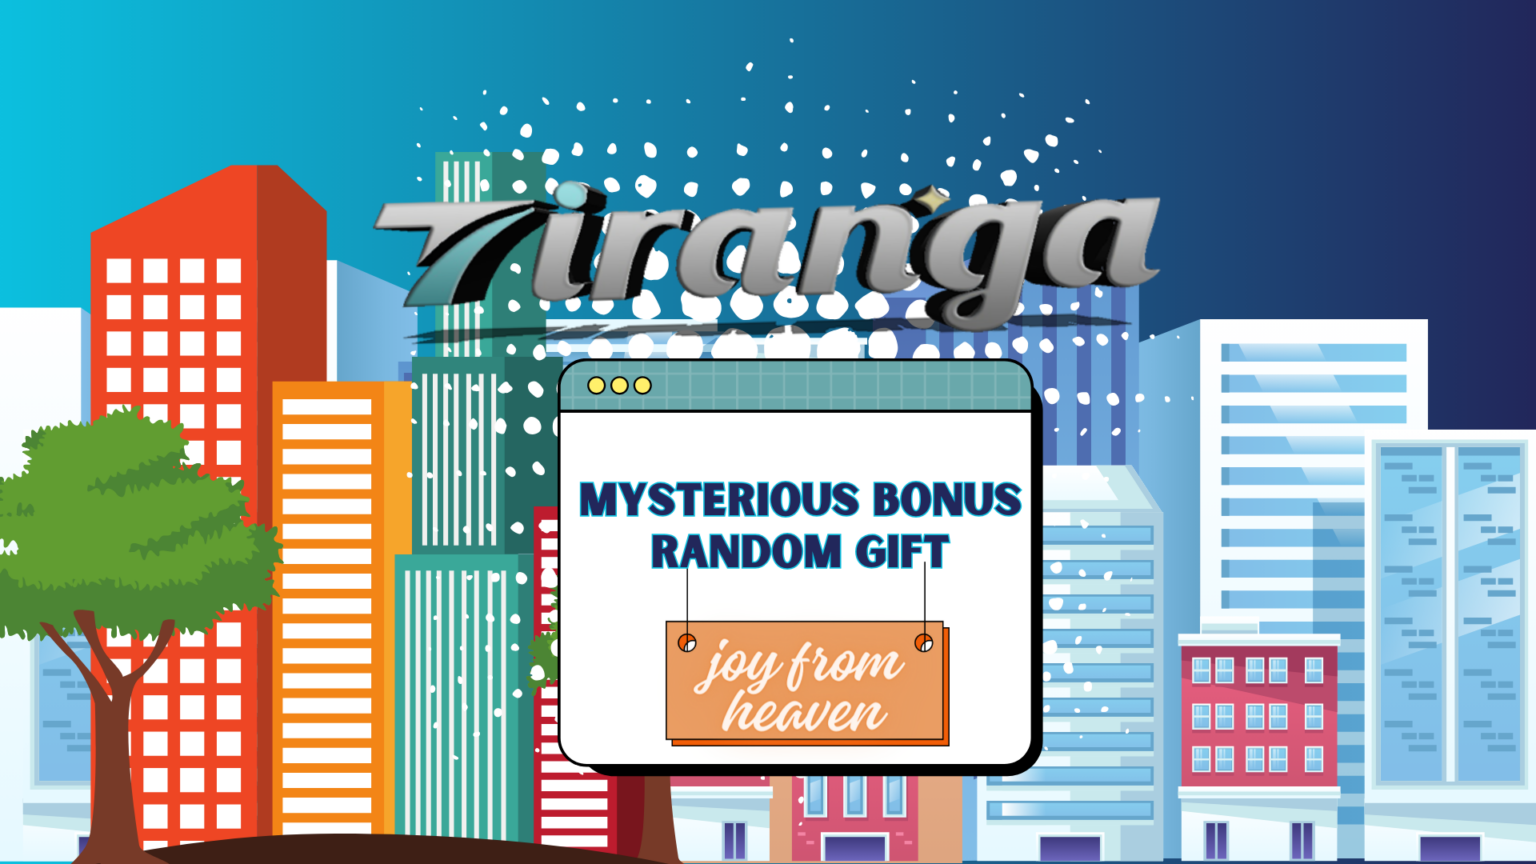 Tiranga Games Mysterious Bonus Random Gift Bonuses